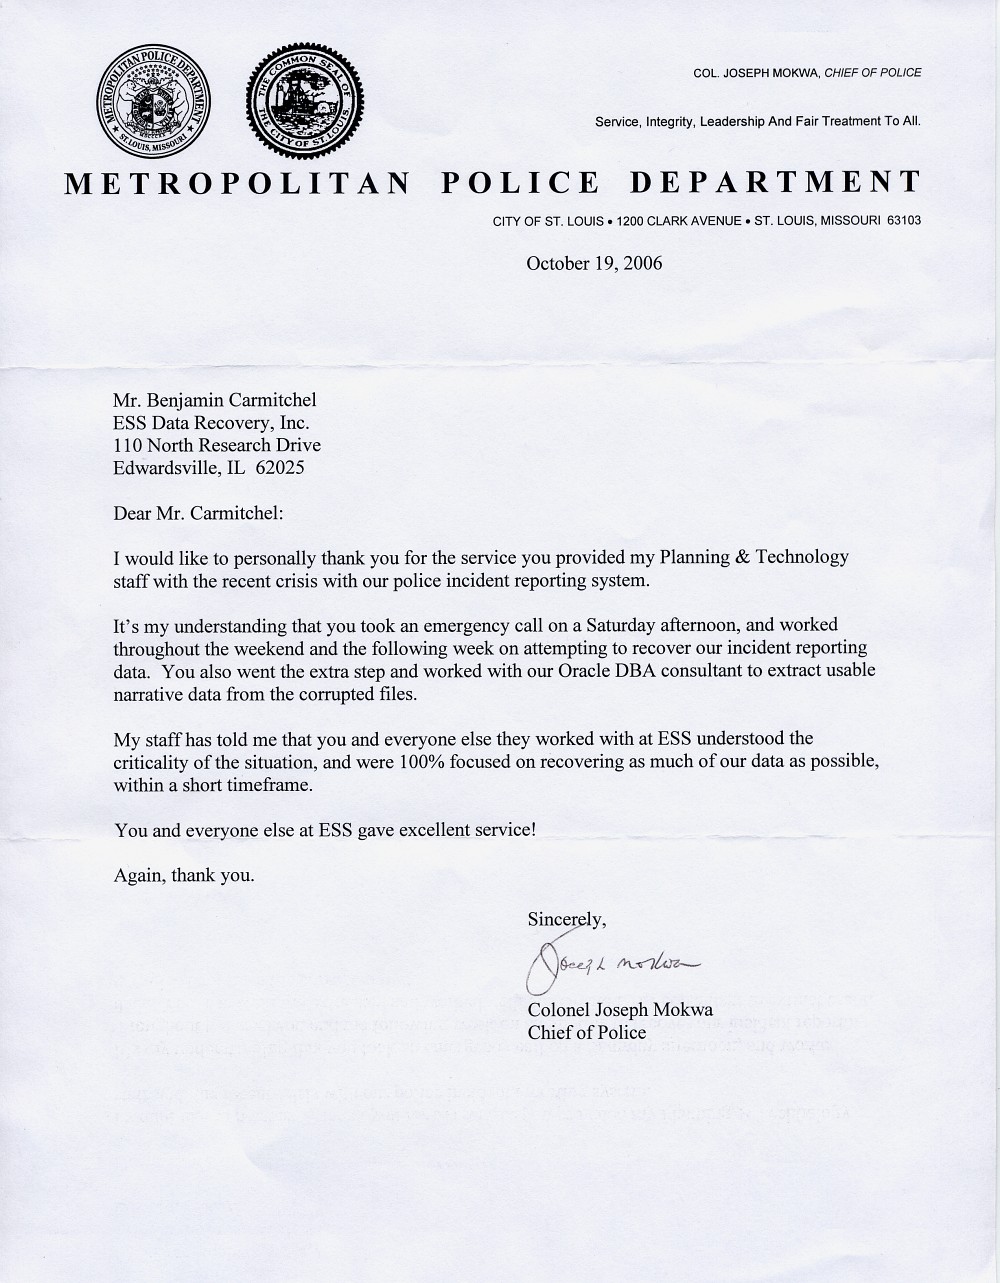 St. Louis Metropolitan Police Department testimonial letter